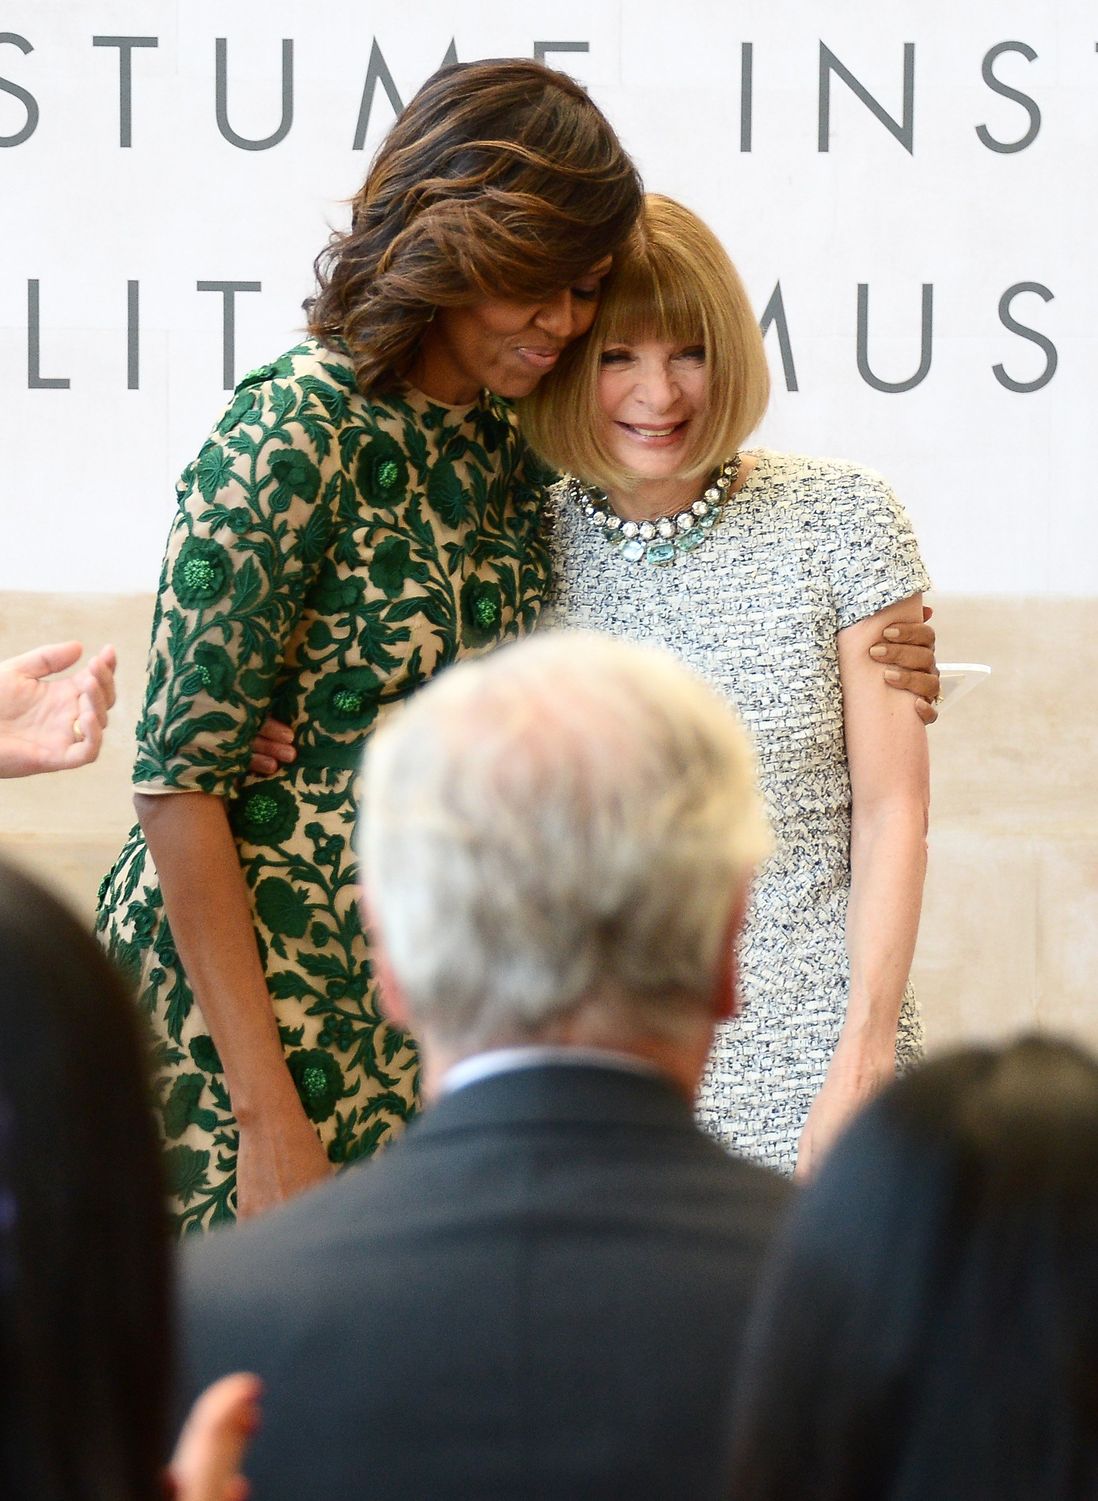 Michelle Obama and Anna Wintour